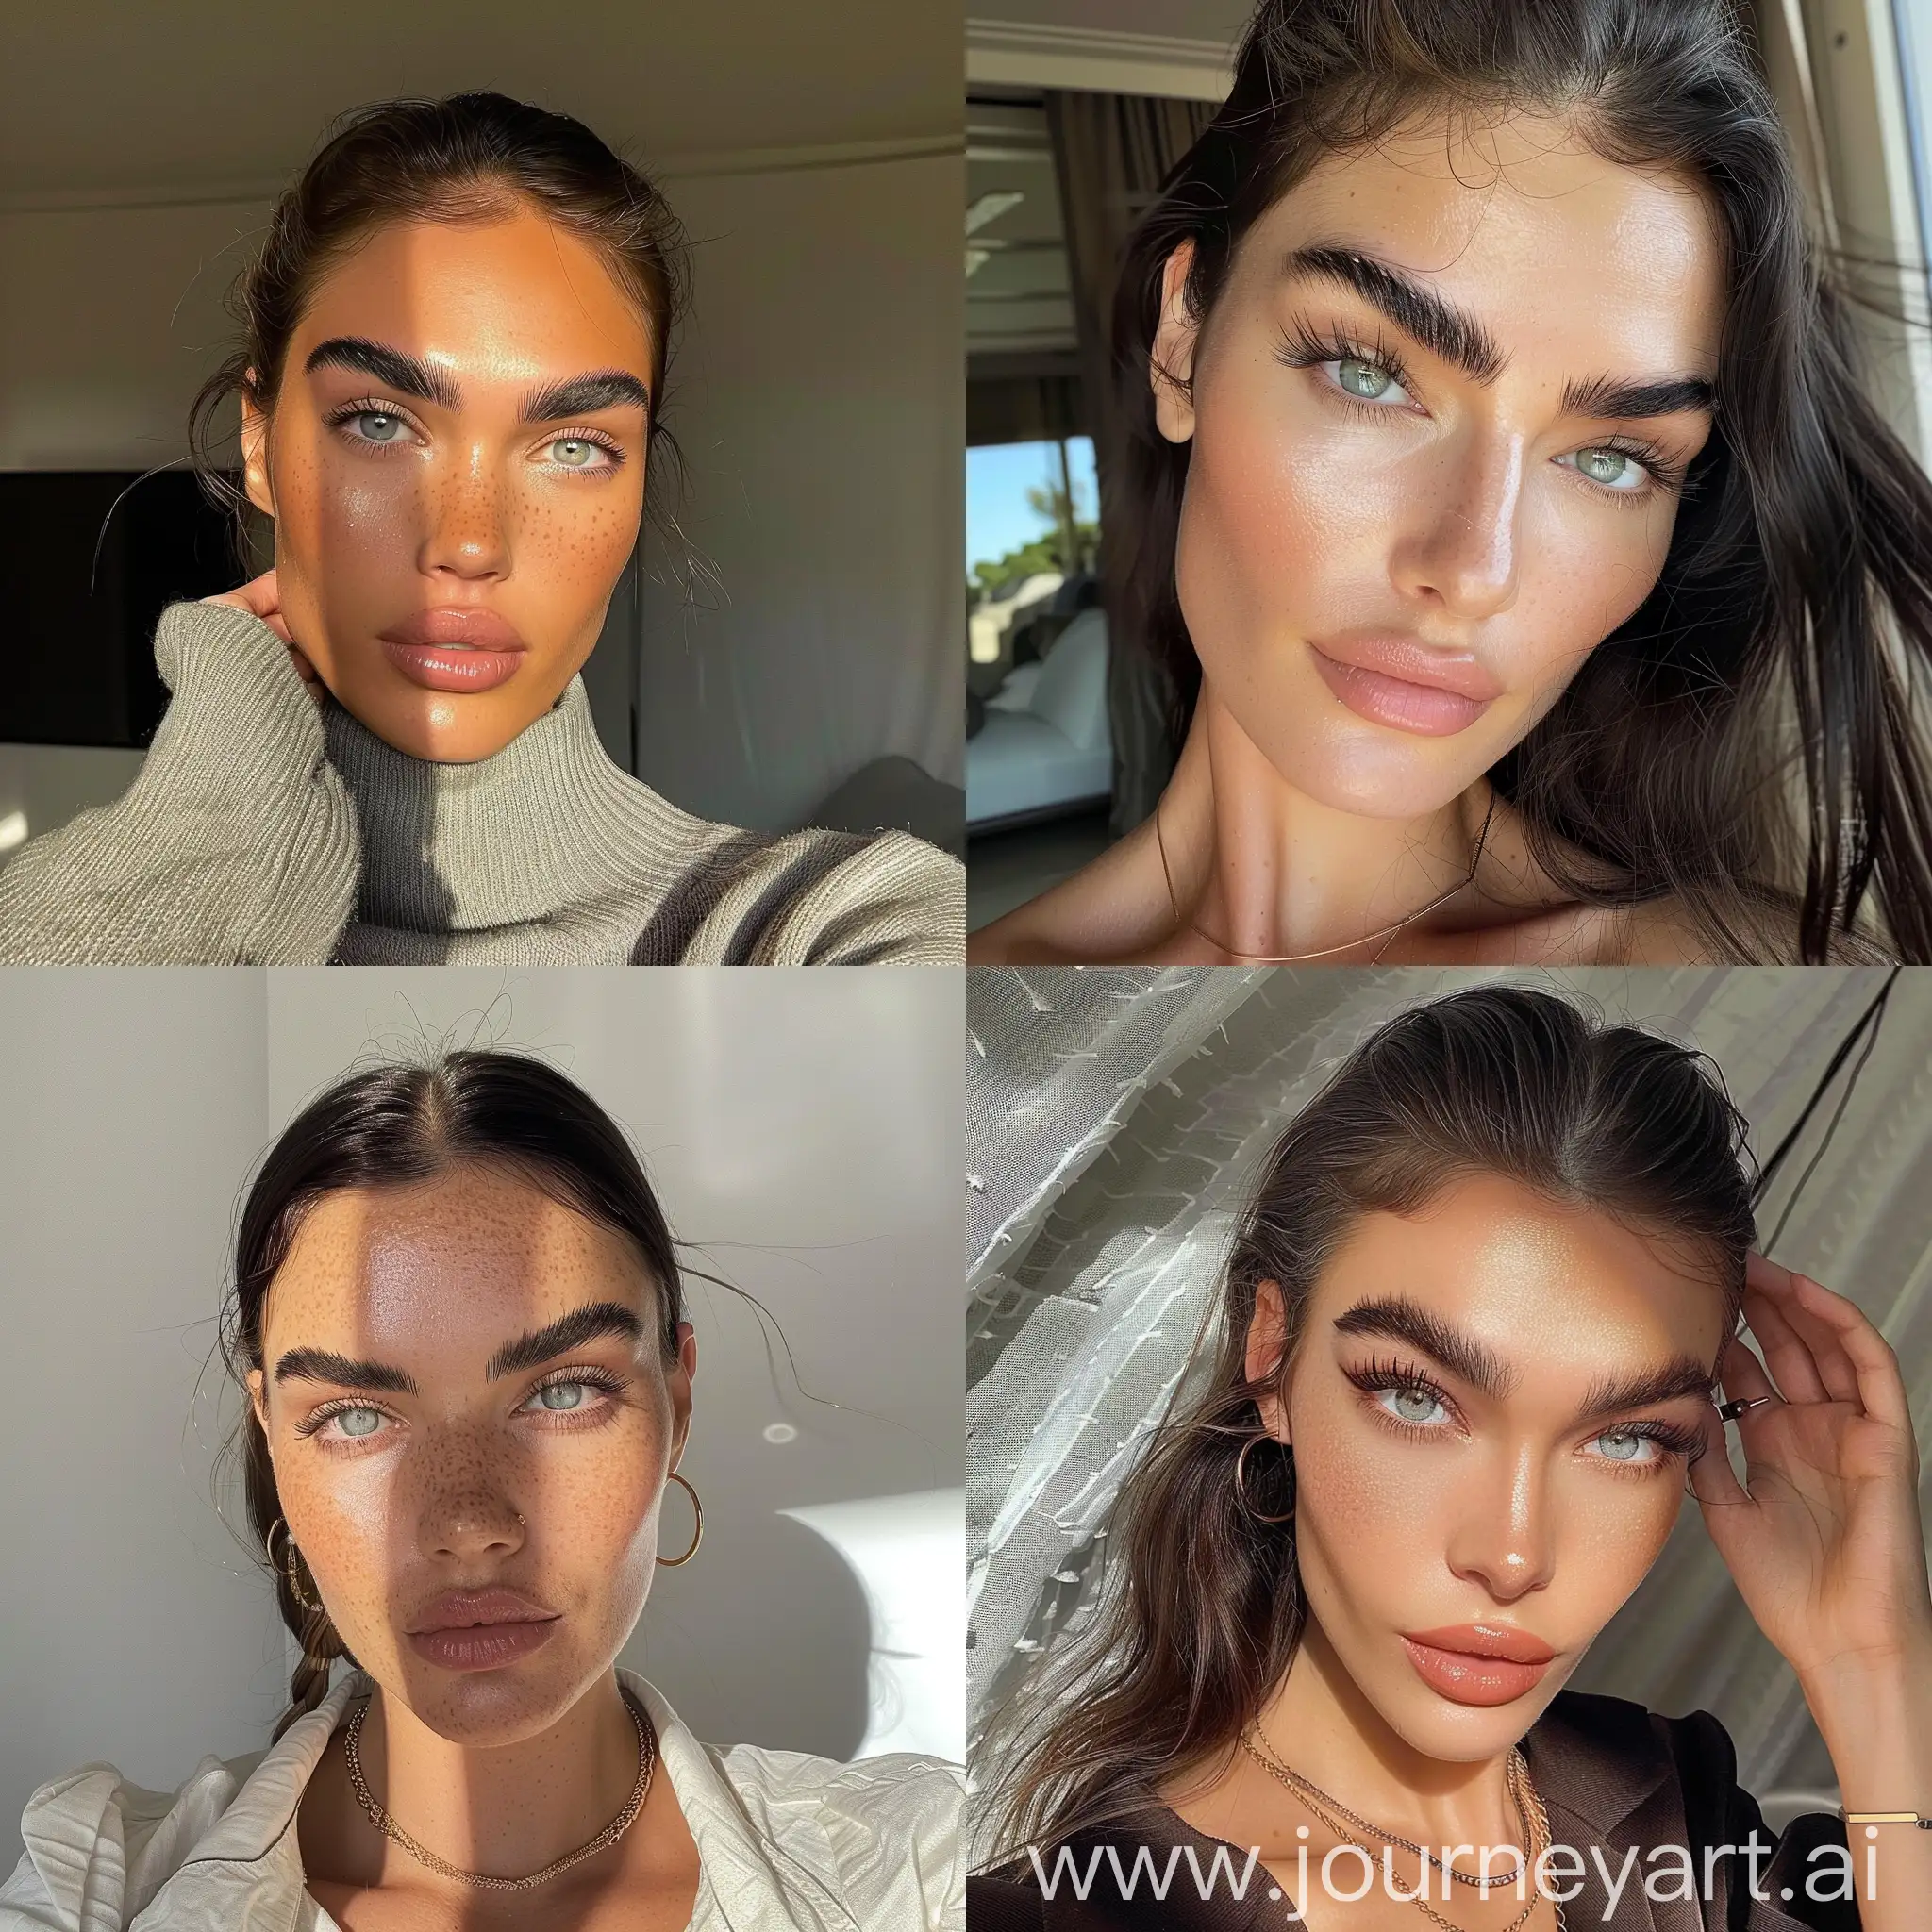 DualHeaded-Female-Supermodel-Selfie-with-Stunning-Bushy-Eyebrows